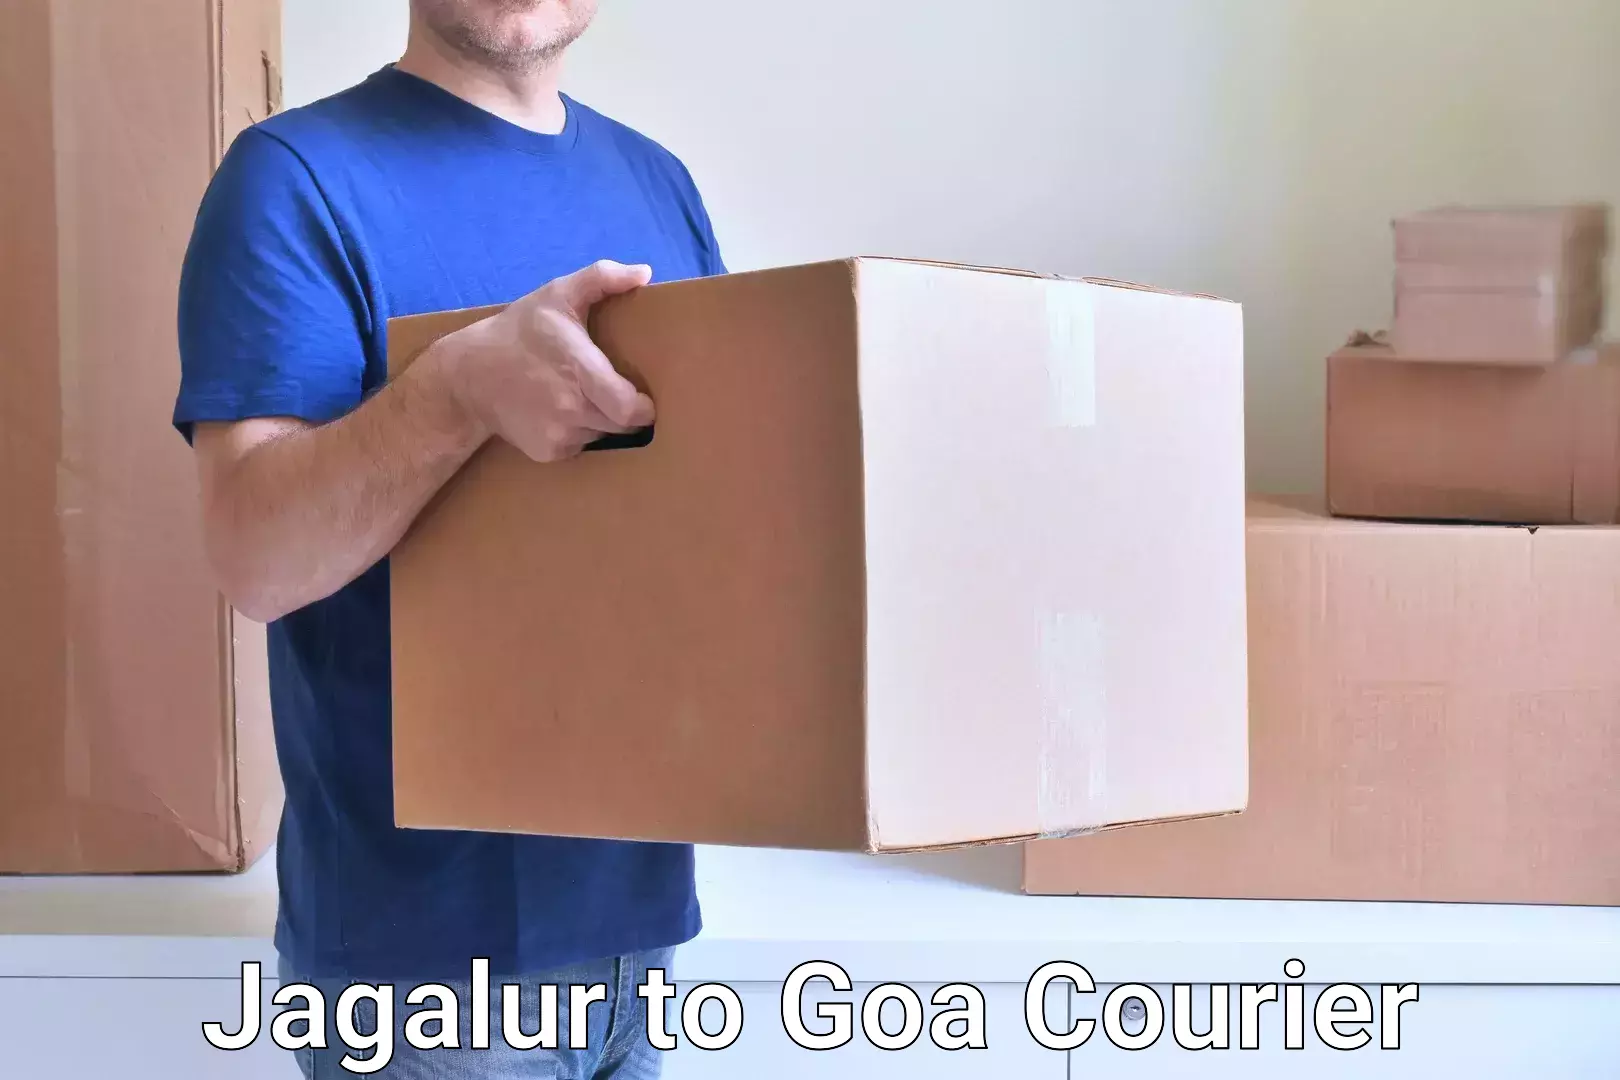 International courier networks Jagalur to Vasco da Gama